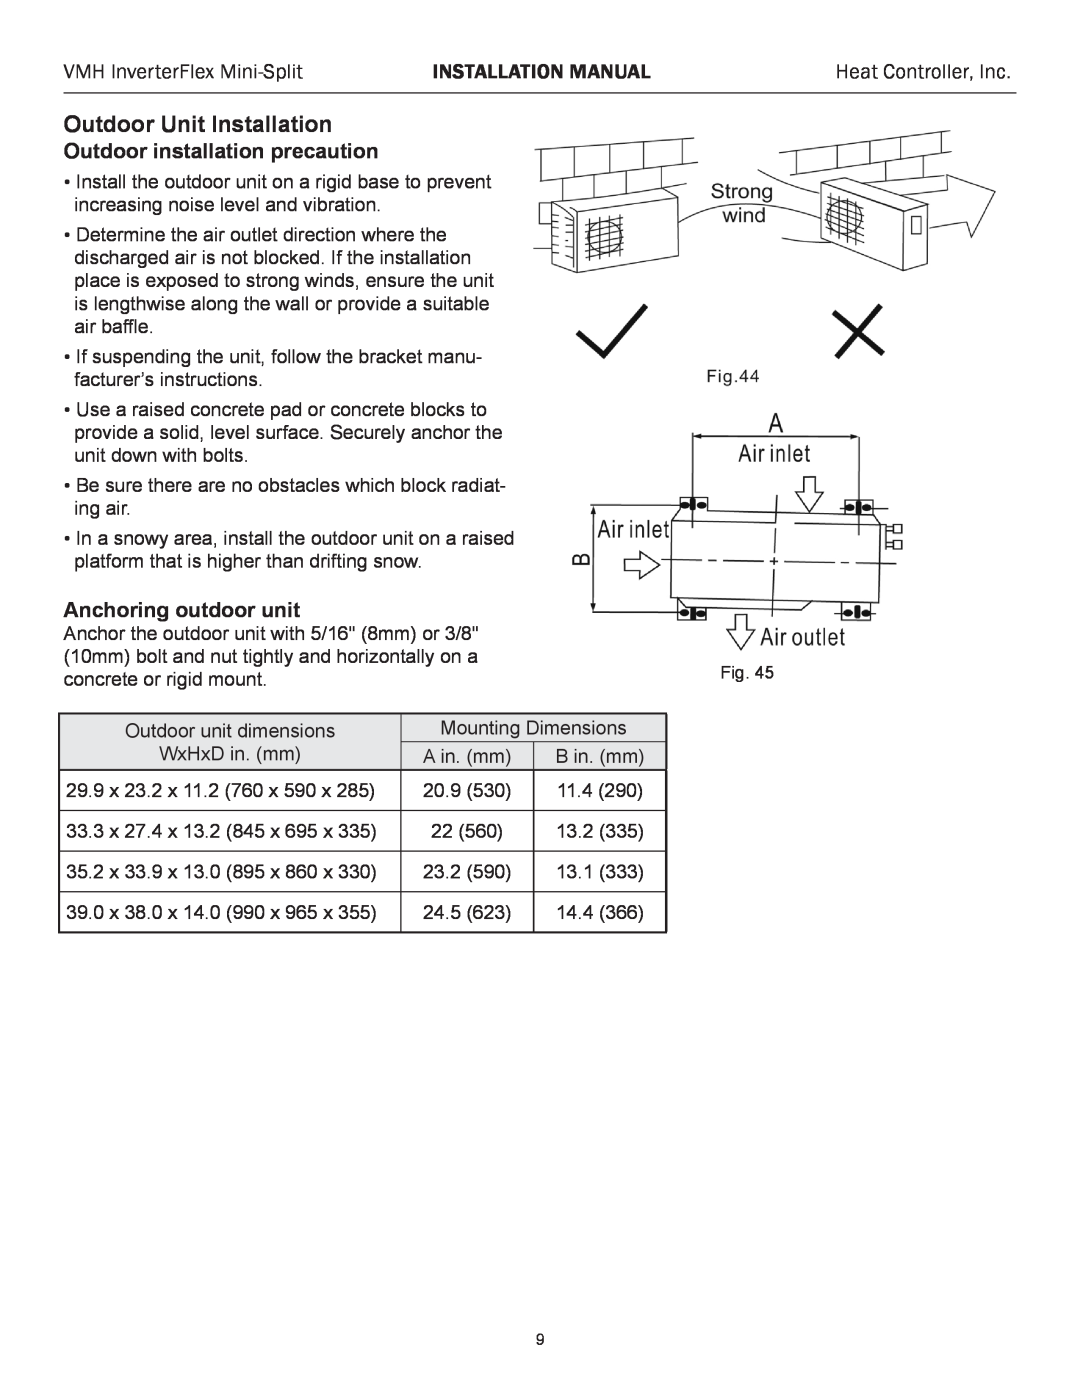 Heat Controller VMH 27 Outdoor Unit Installation, VMH InverterFlex Mini-Split, Installation Manual, Heat Controller, Inc 